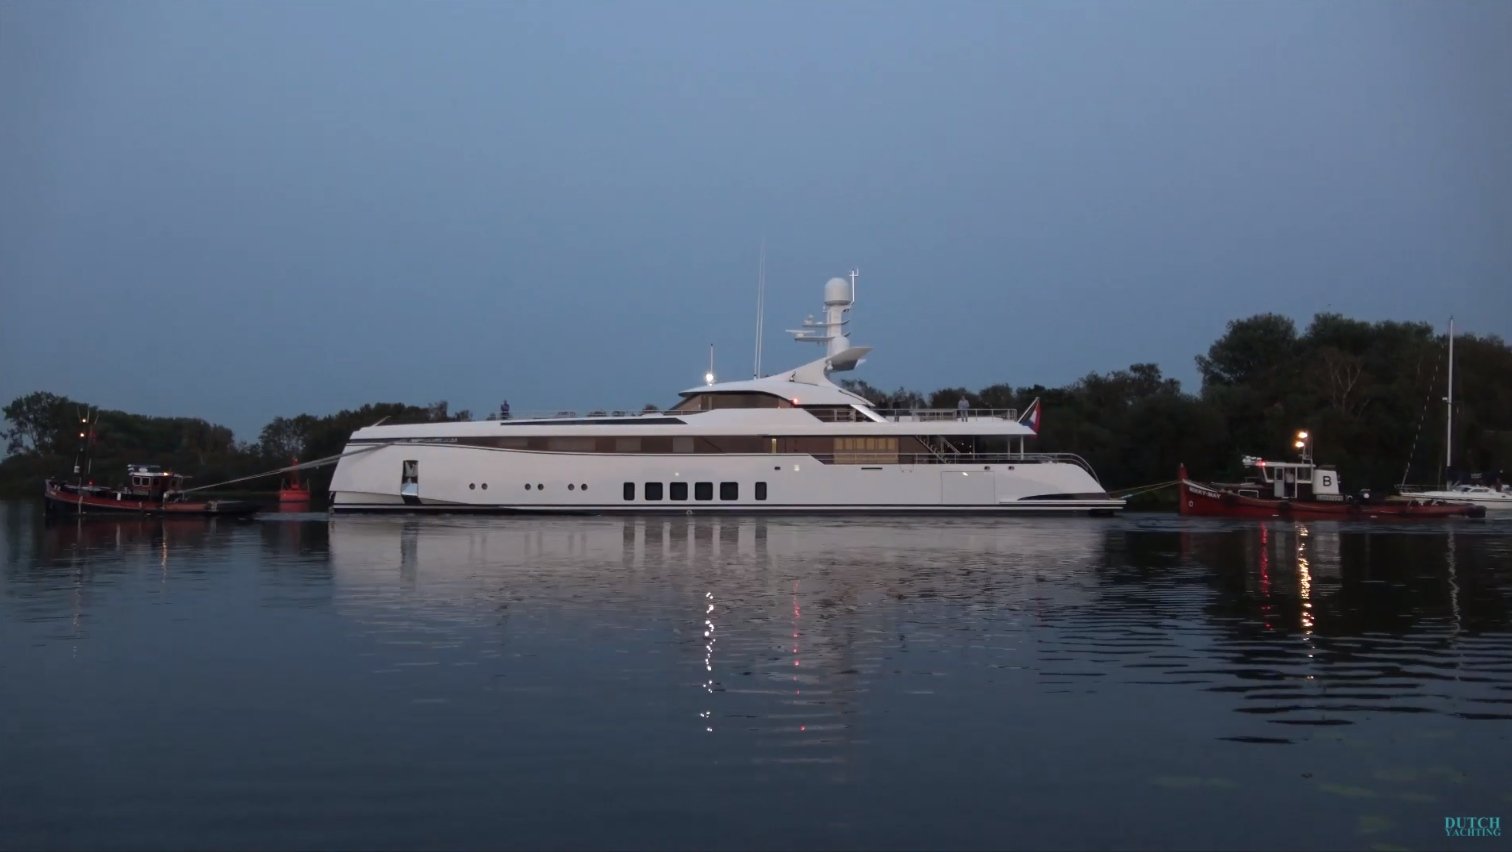 TOTALLY NUTS yacht - Feadship - 2020 - propriétaire Sarkis Izmirlian